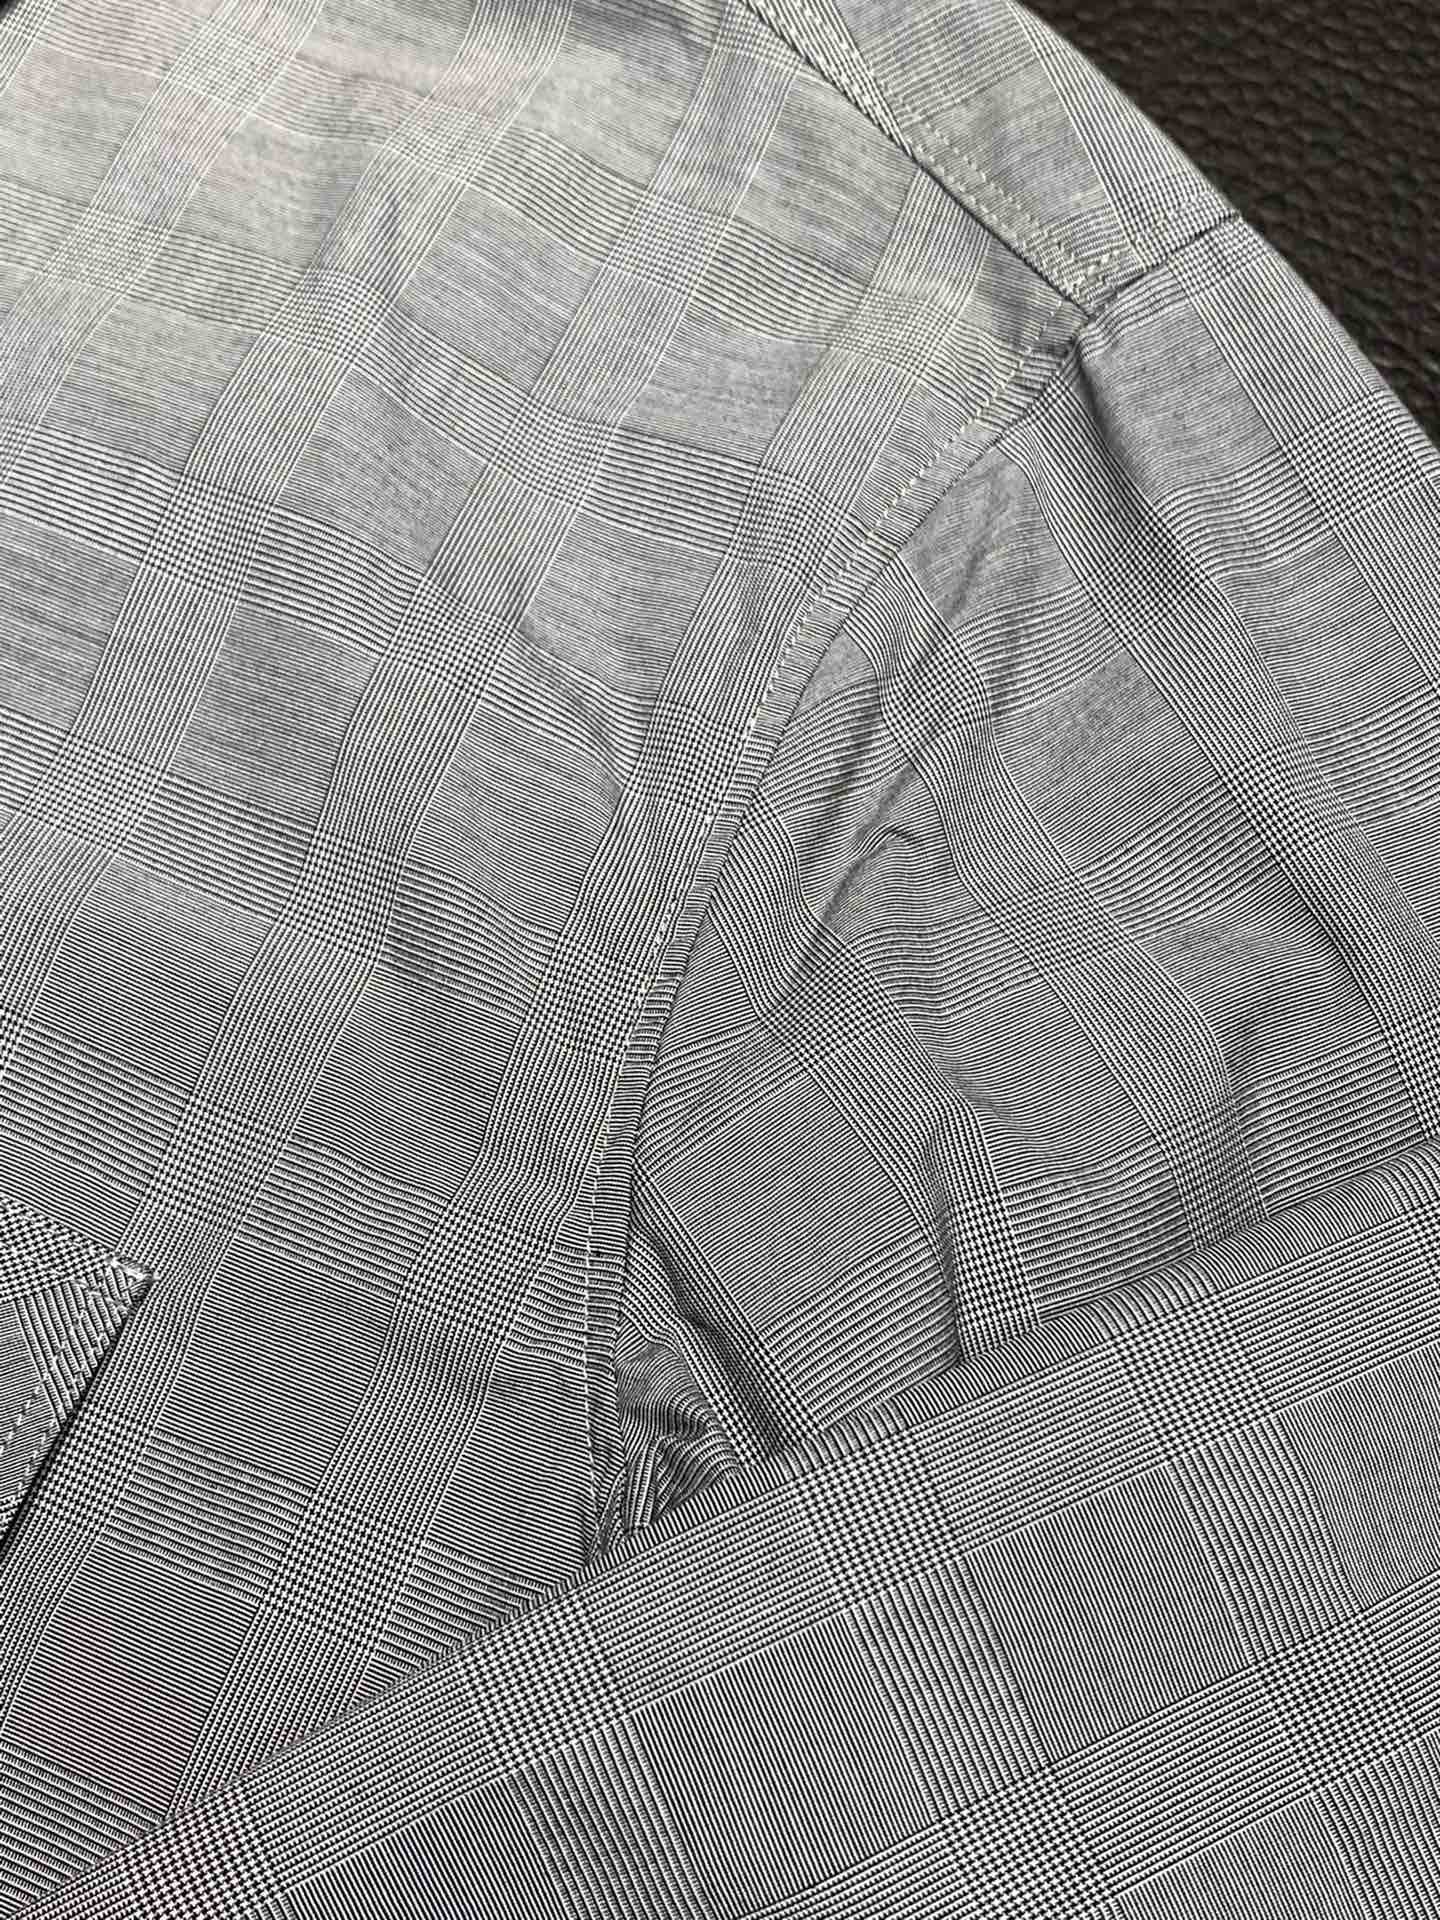 BBR巴宝莉独家专供新品时尚休闲Polo长袖进口原版科技面料柔软舒适上身舒适透气独特设计风格无论是单穿还